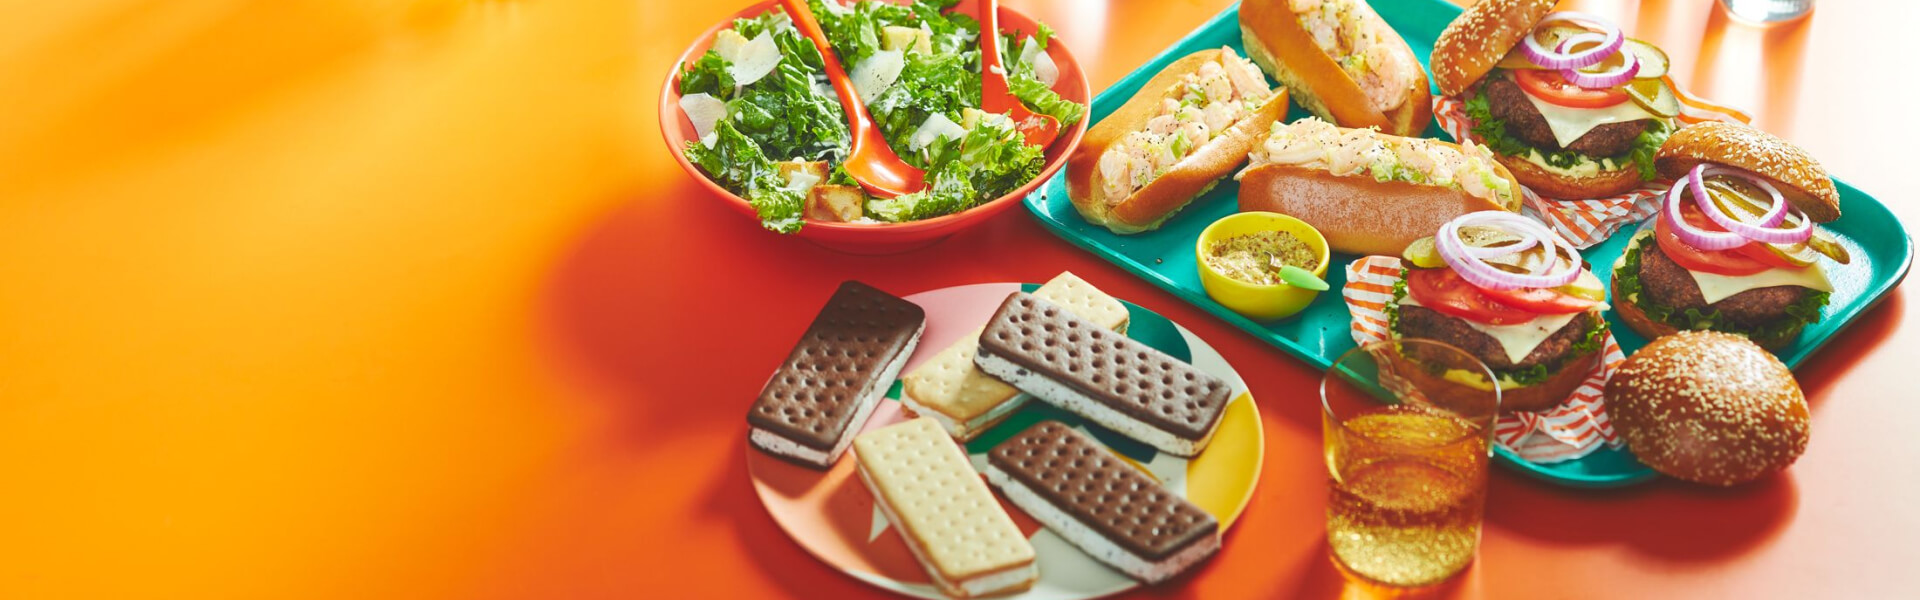 orange surface with platters of food: shrimp rolls, burgers, caesar salad and ice cream bars